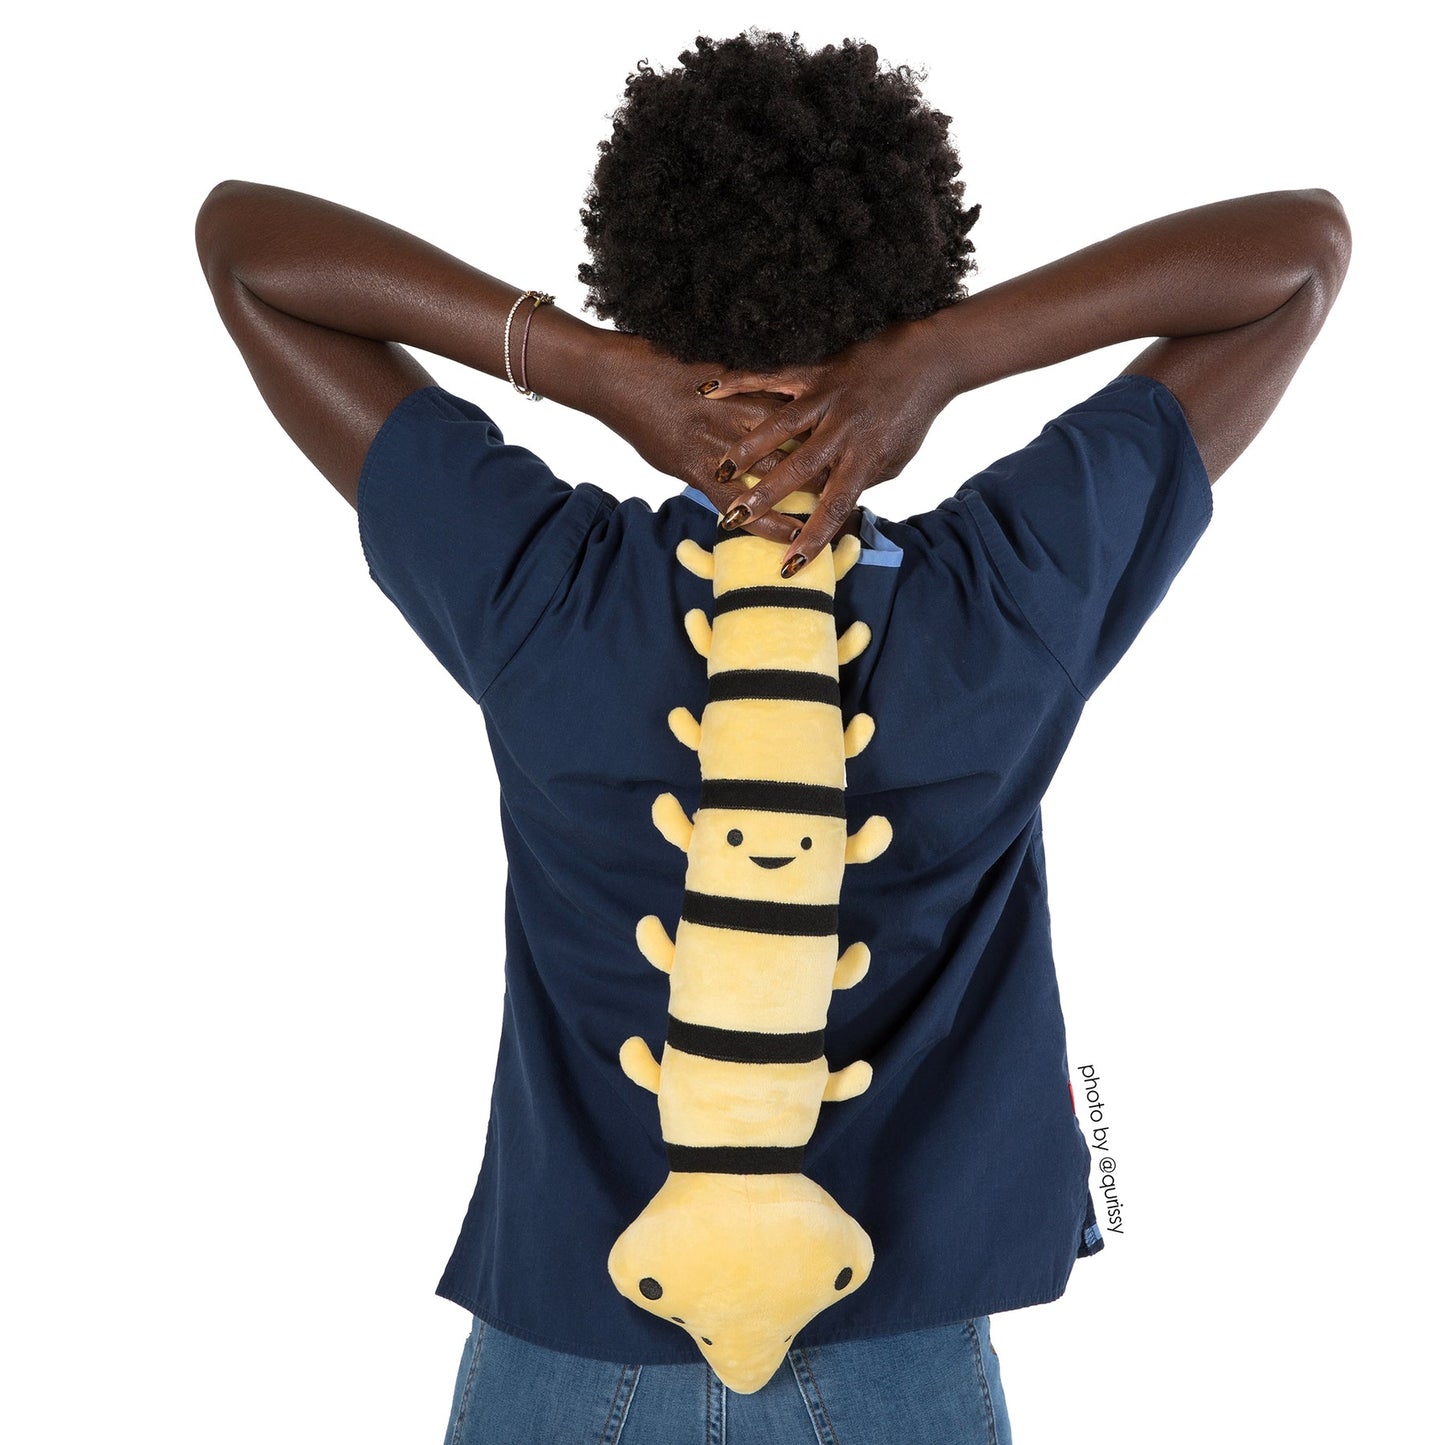 Spine Plush - Got Your Back